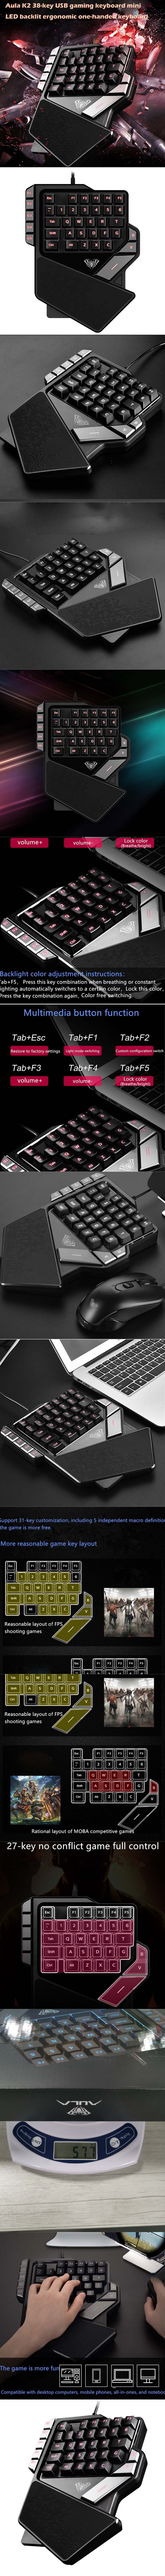 AULA K2 USB Mini Gaming Keyboard